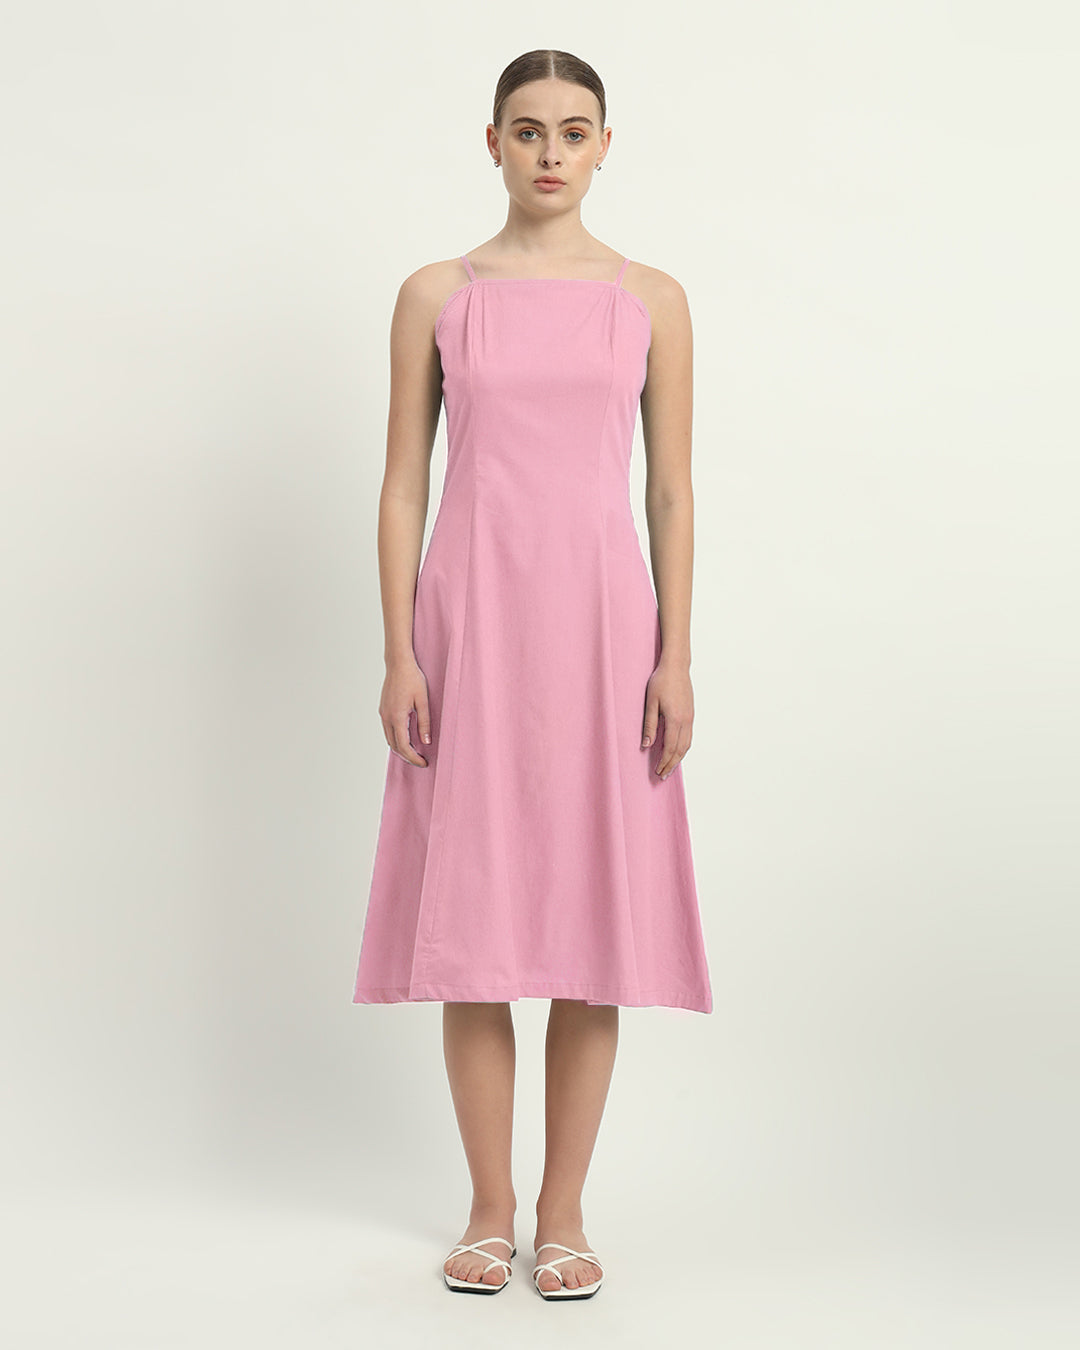 The Fondant Pink Valatie Cotton Dress